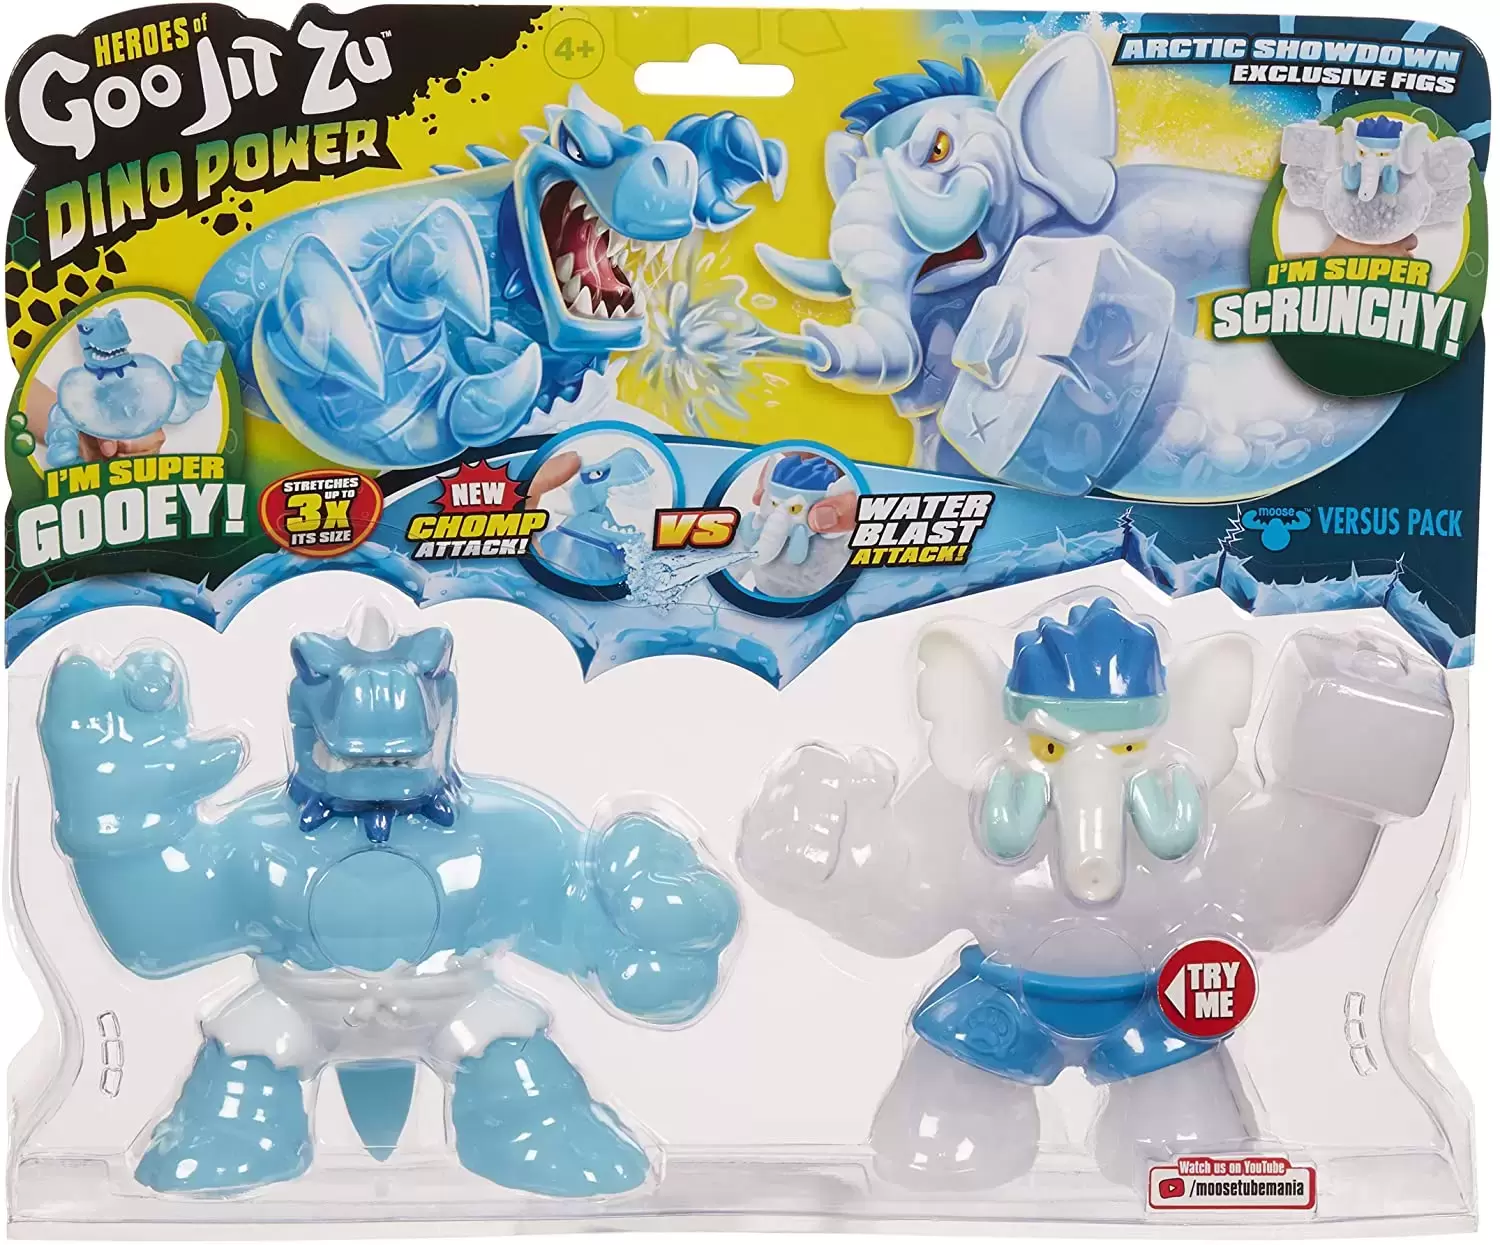 Dino Power – Gooey Vs Scrunchy - Heroes of Goo Jit Zu action figure